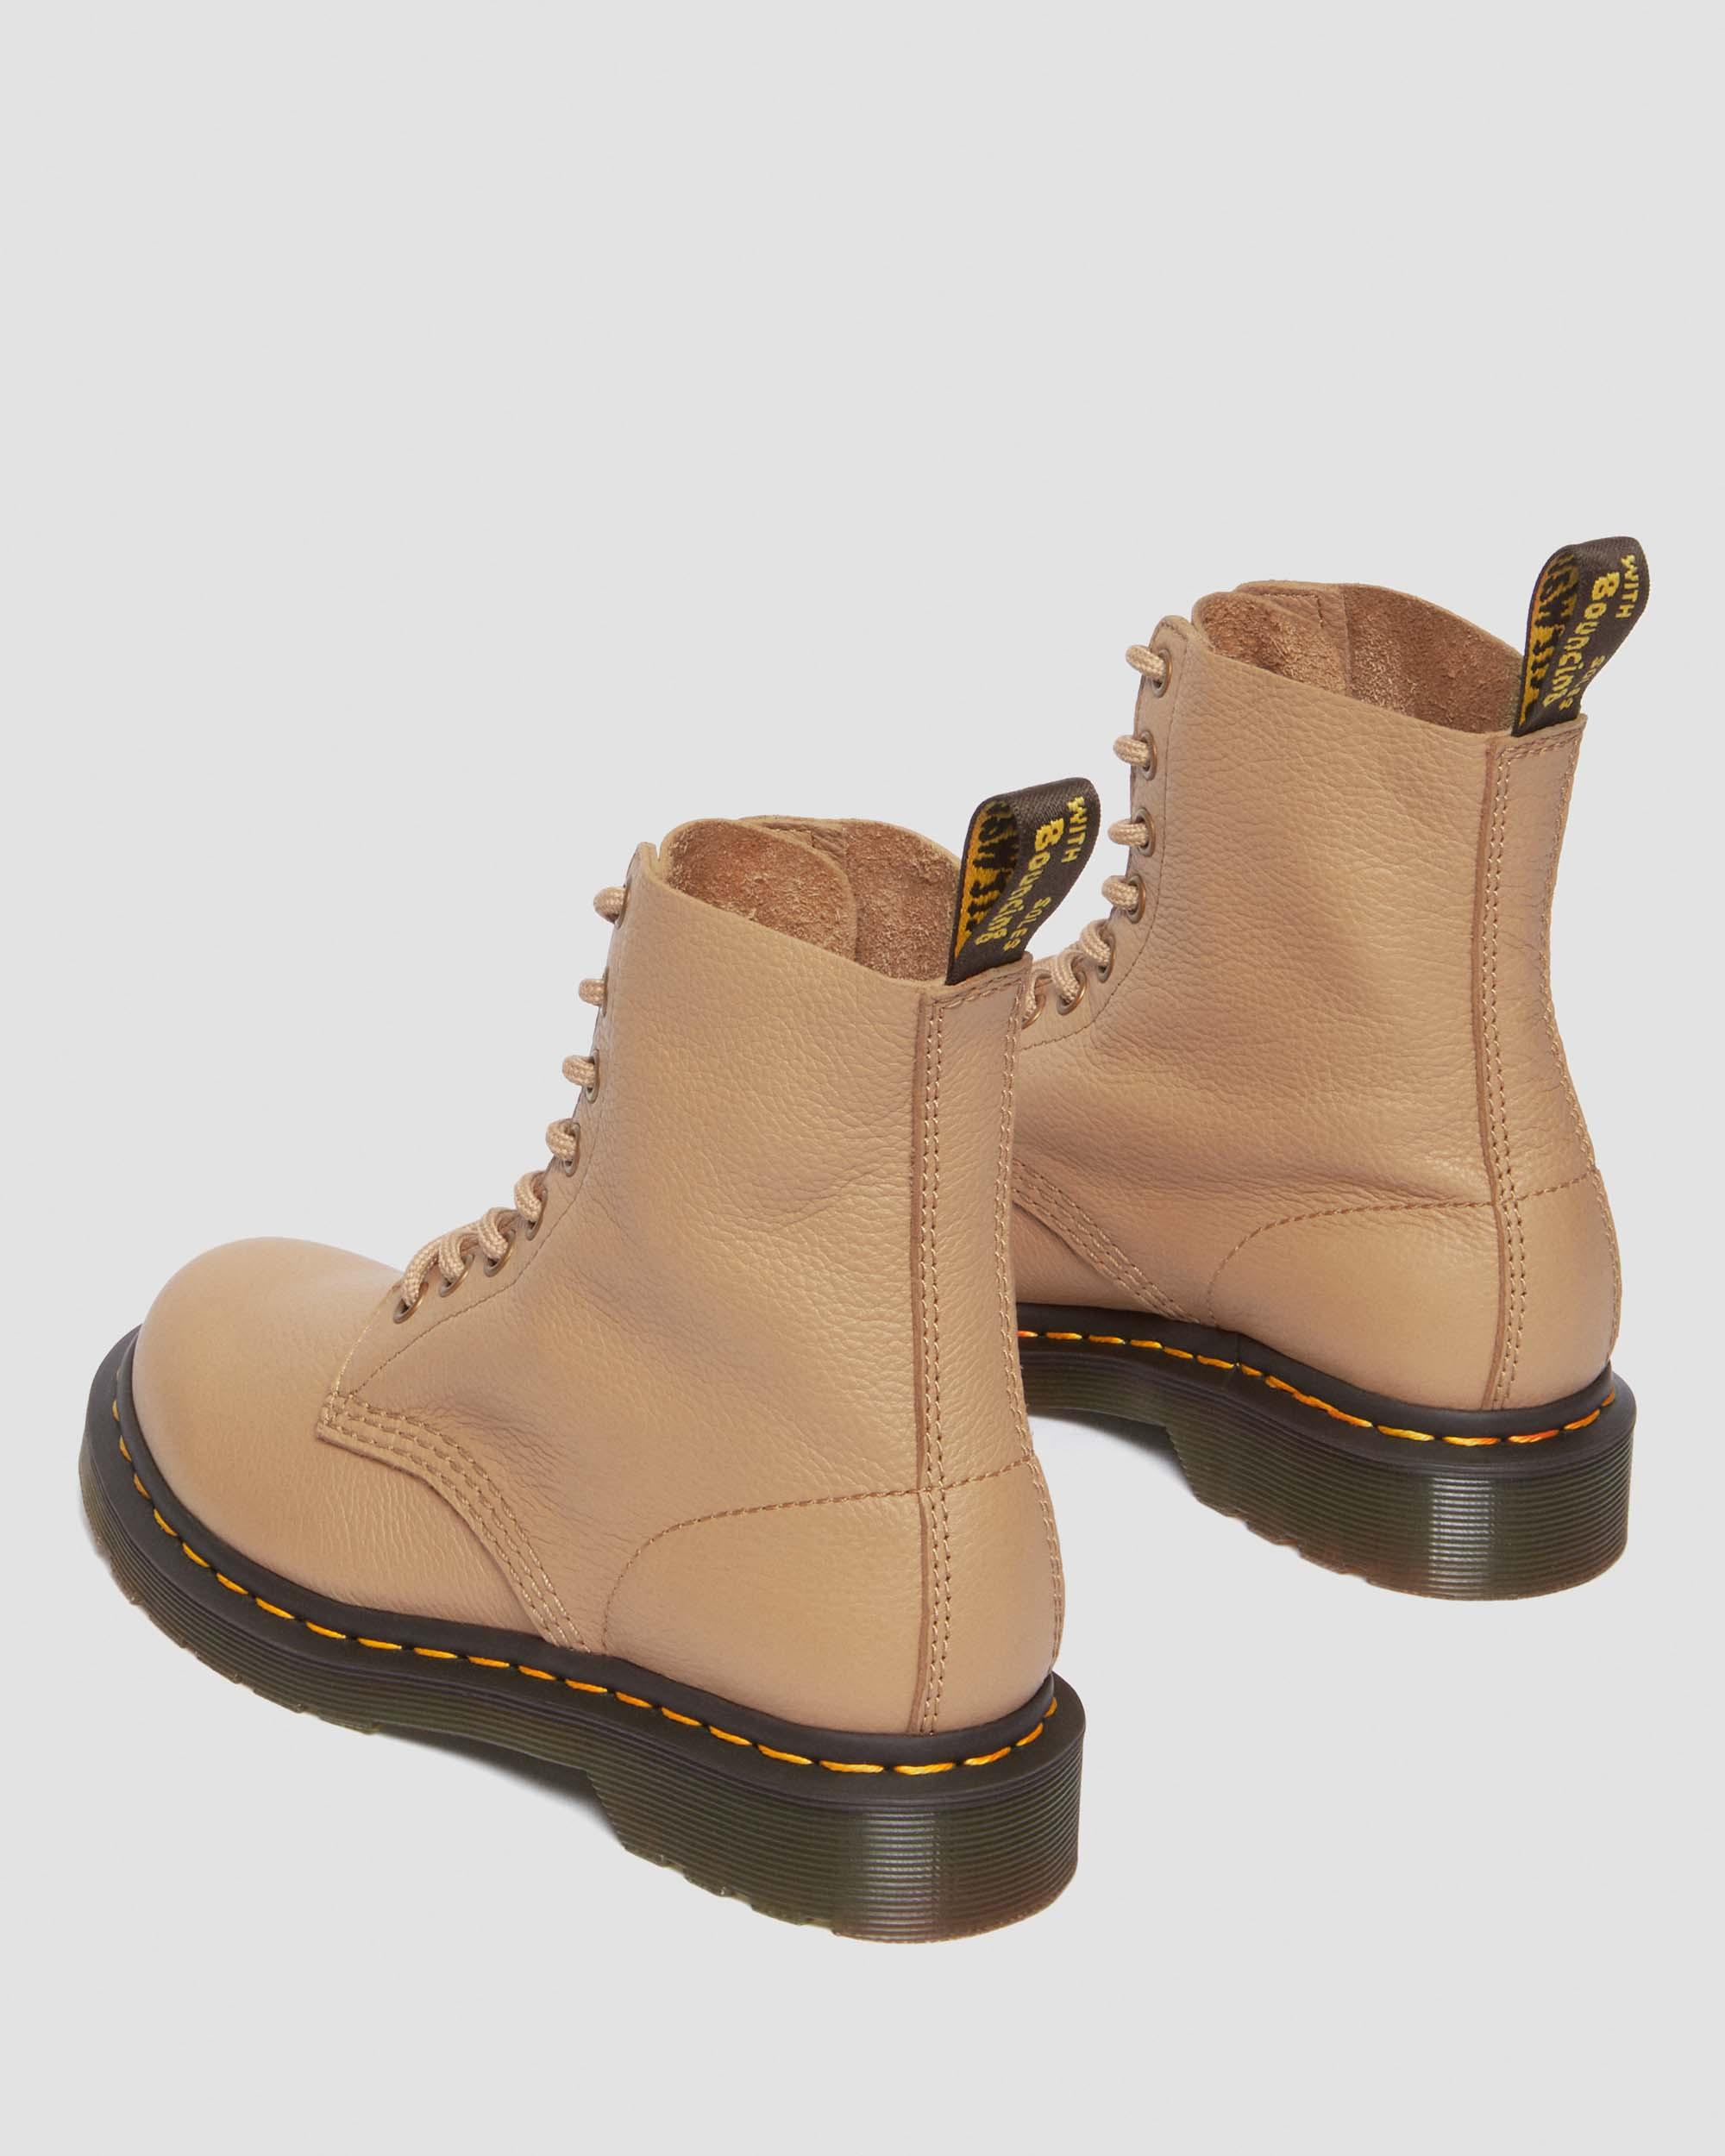 1460 Pascal Virginia Leather Boots in Savannah Tan